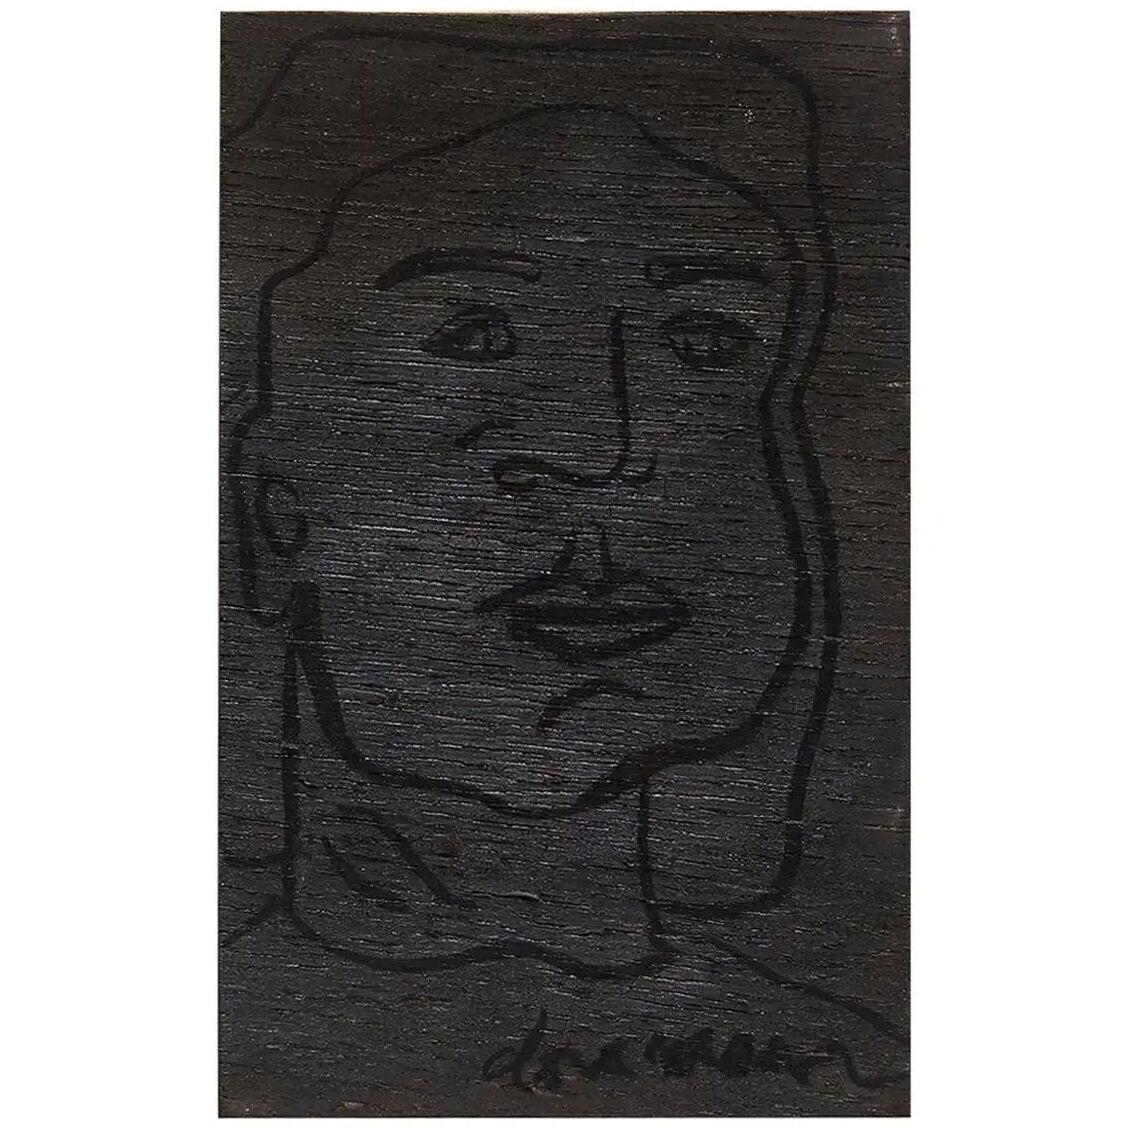 Adrian Black Portrait of Dora Maar Painting on Wood, 2017, Free Shipping